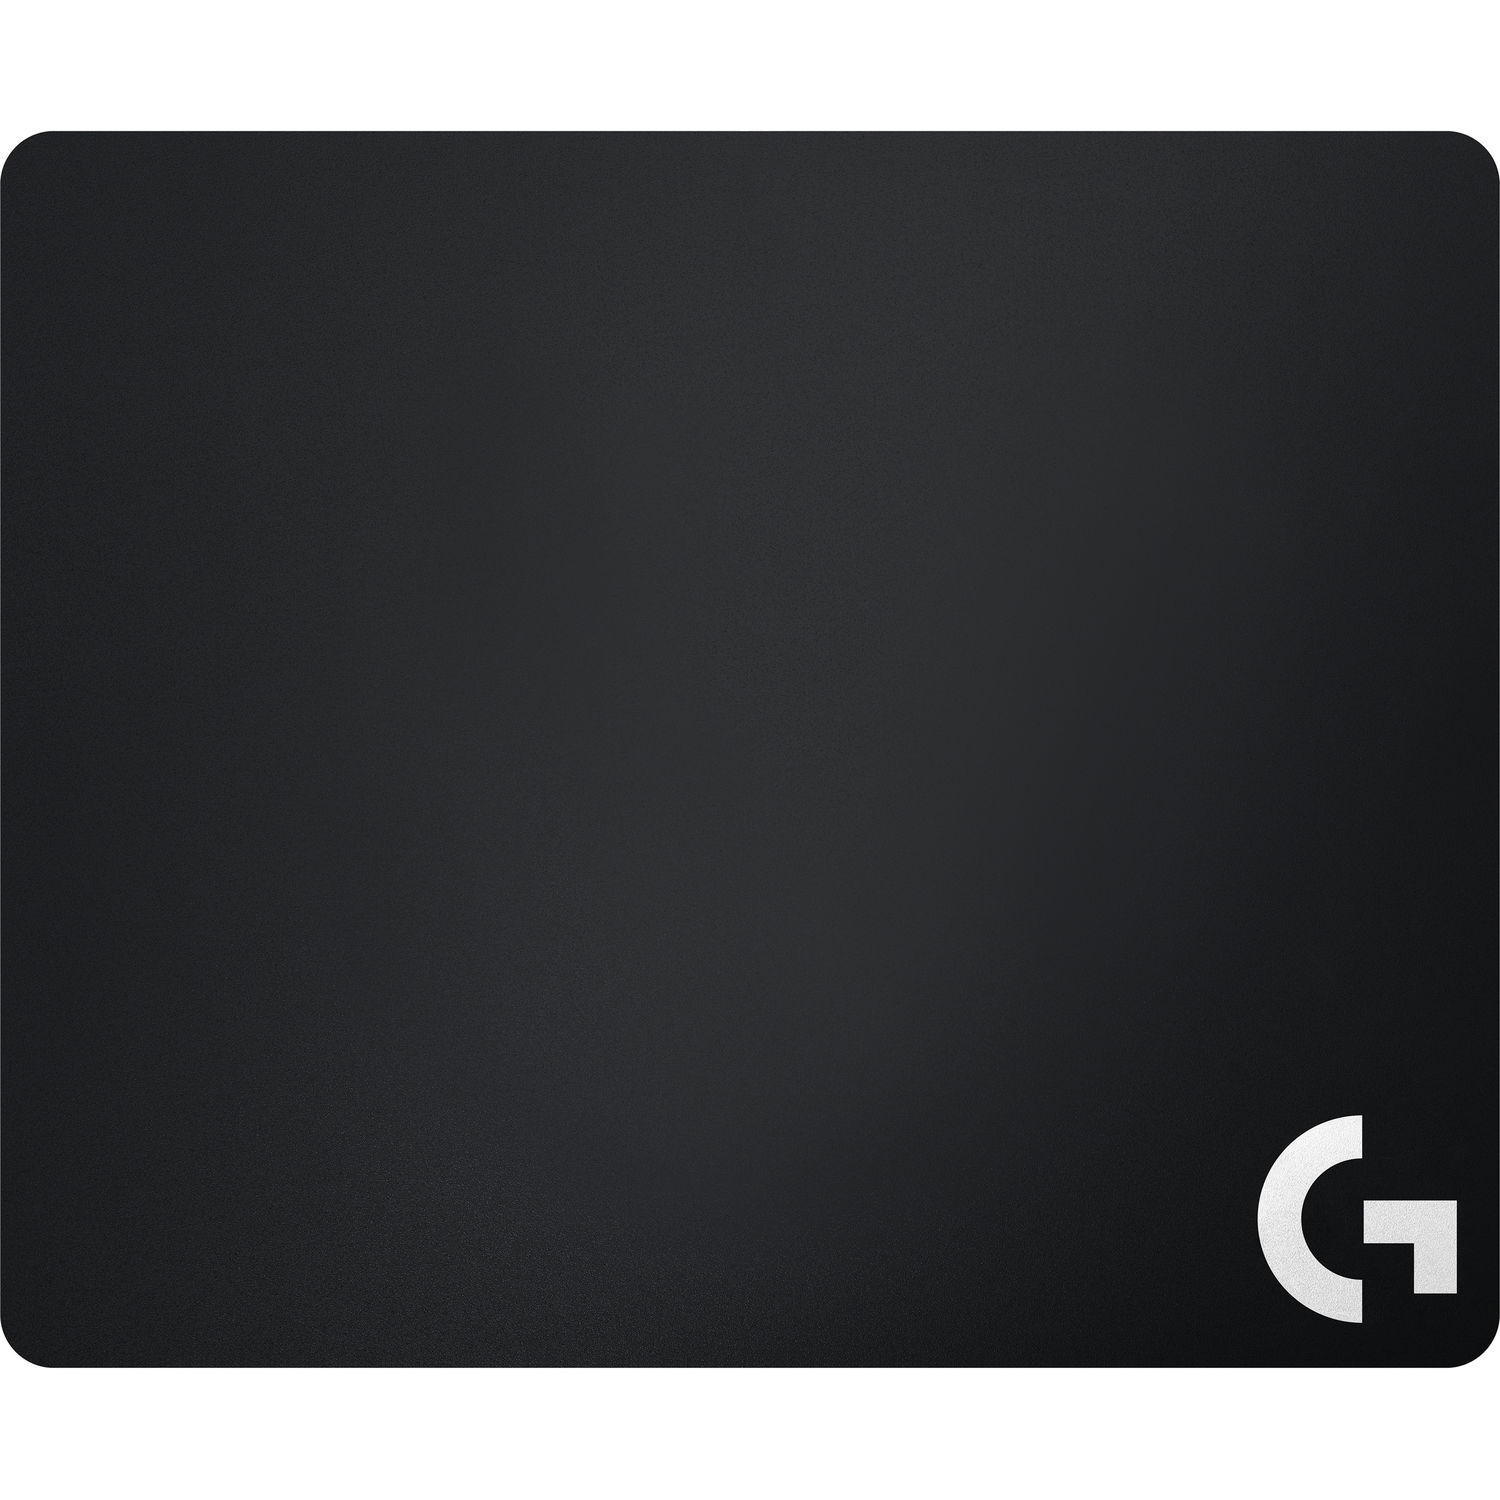 Logitech G G240 Cloth Gaming Mouse Pad 943 B H Photo Video